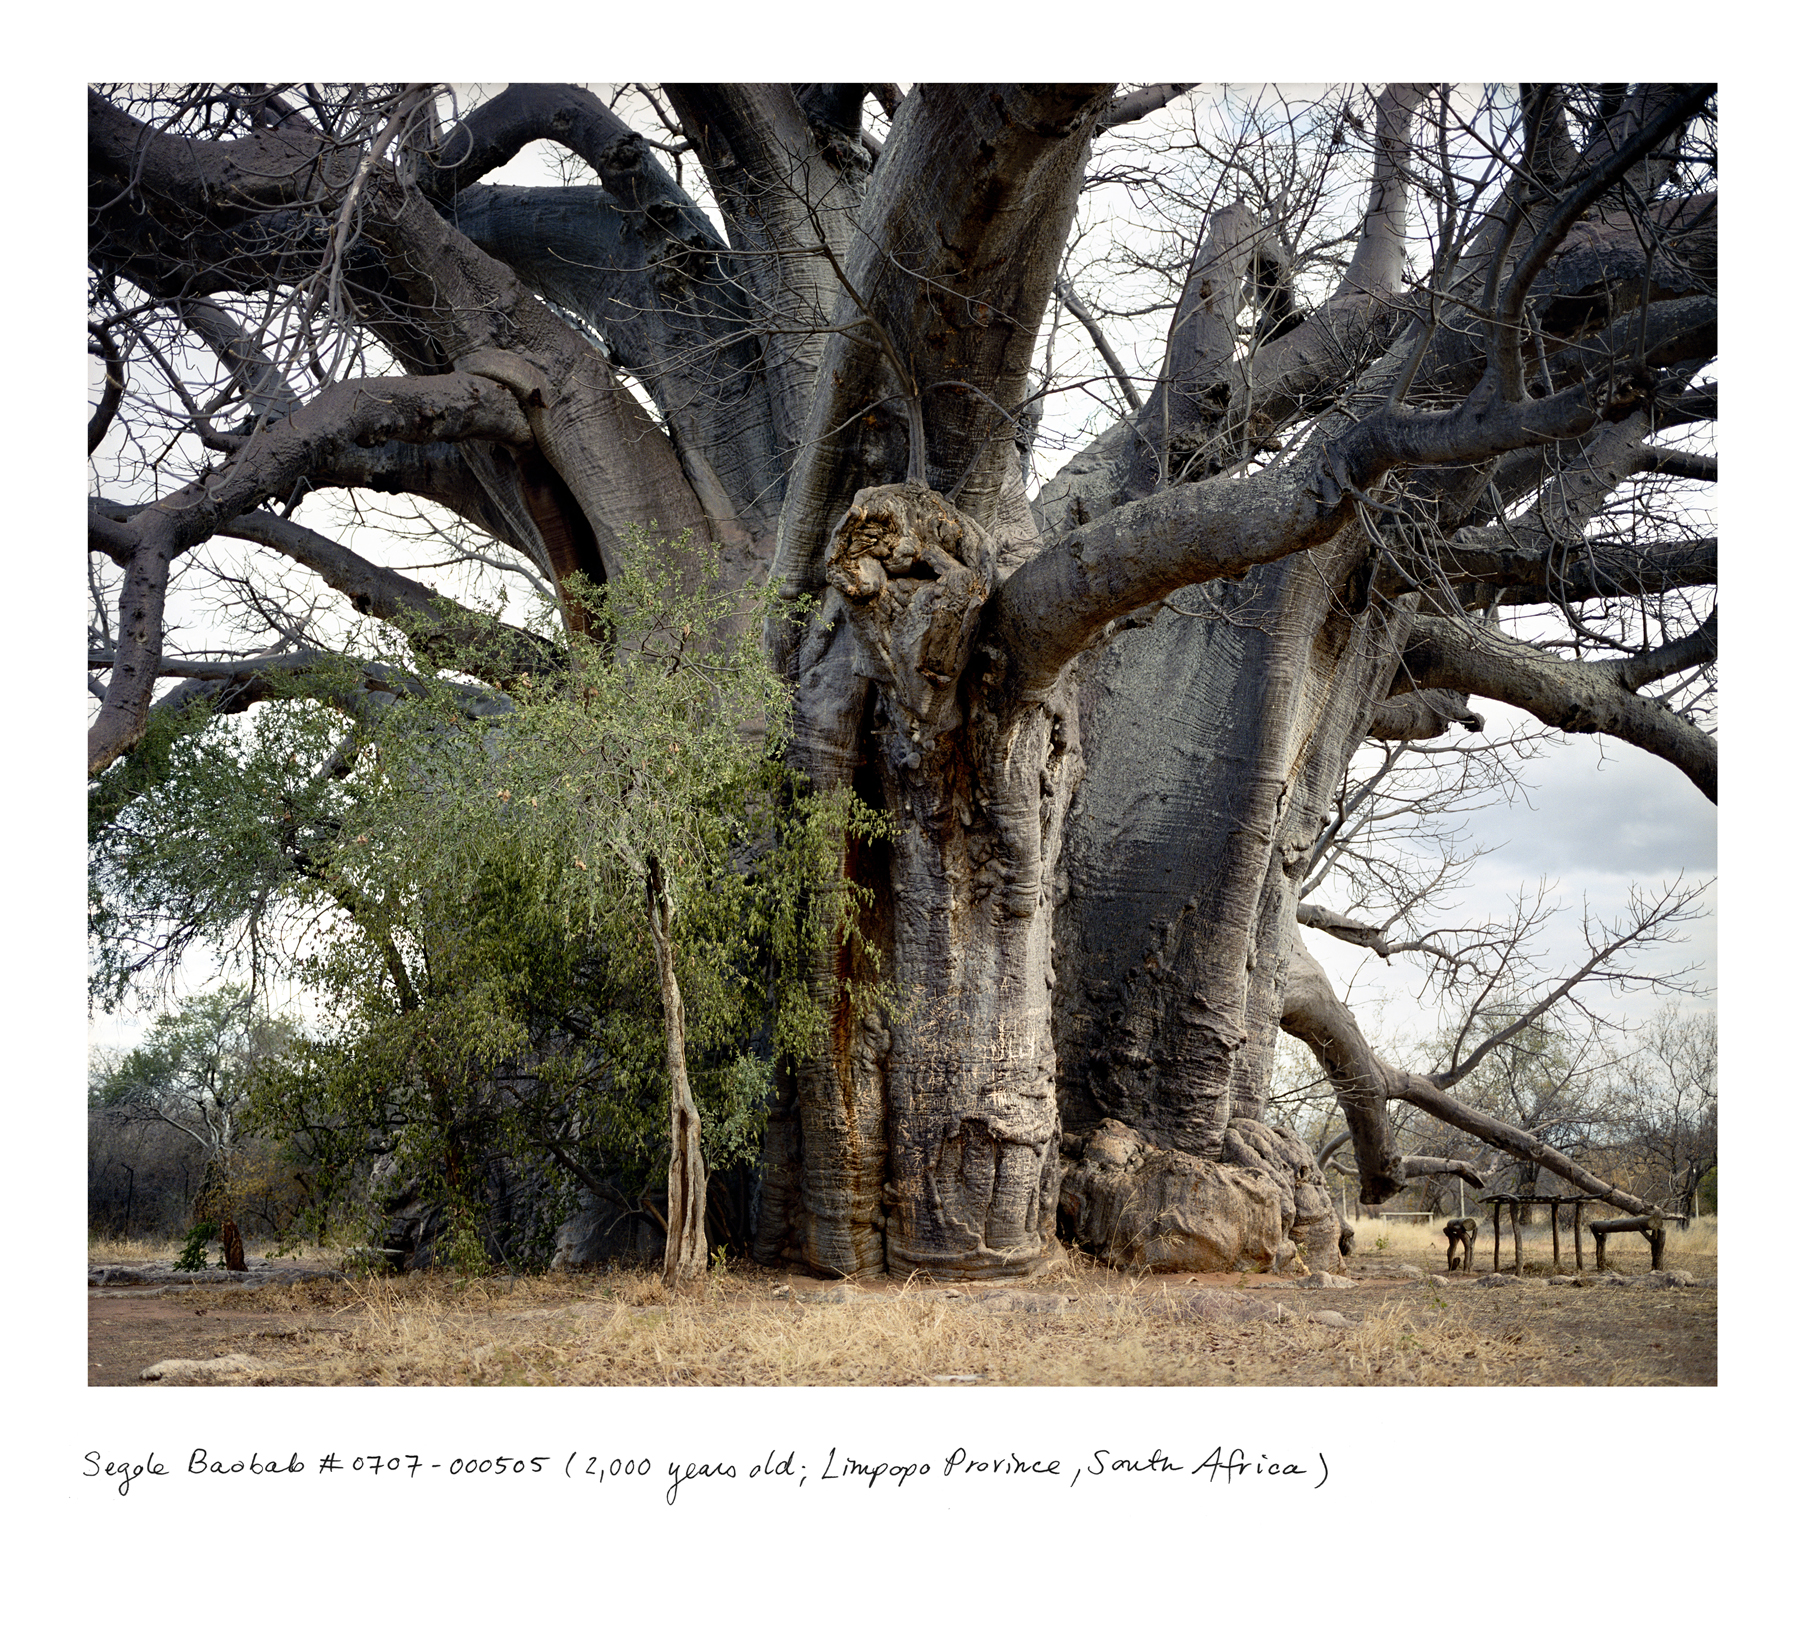 Image of a Sagole Baobab tree.